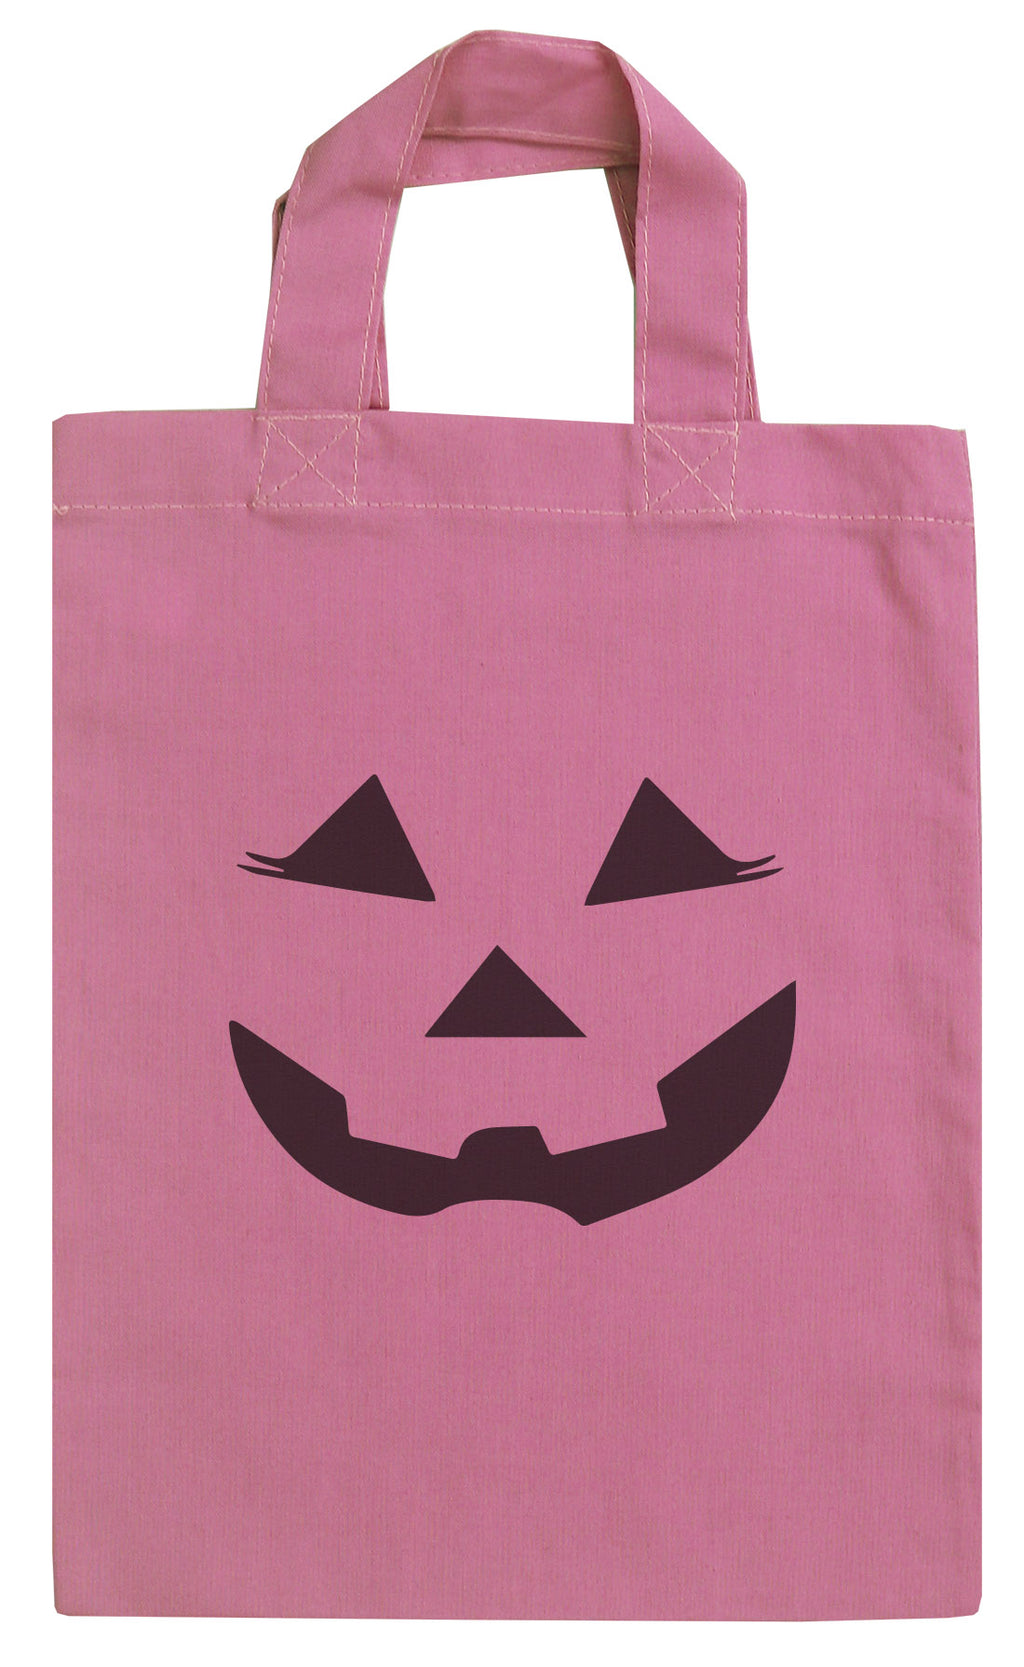 Pumpkin Girl Trick or Treat Bag - Small